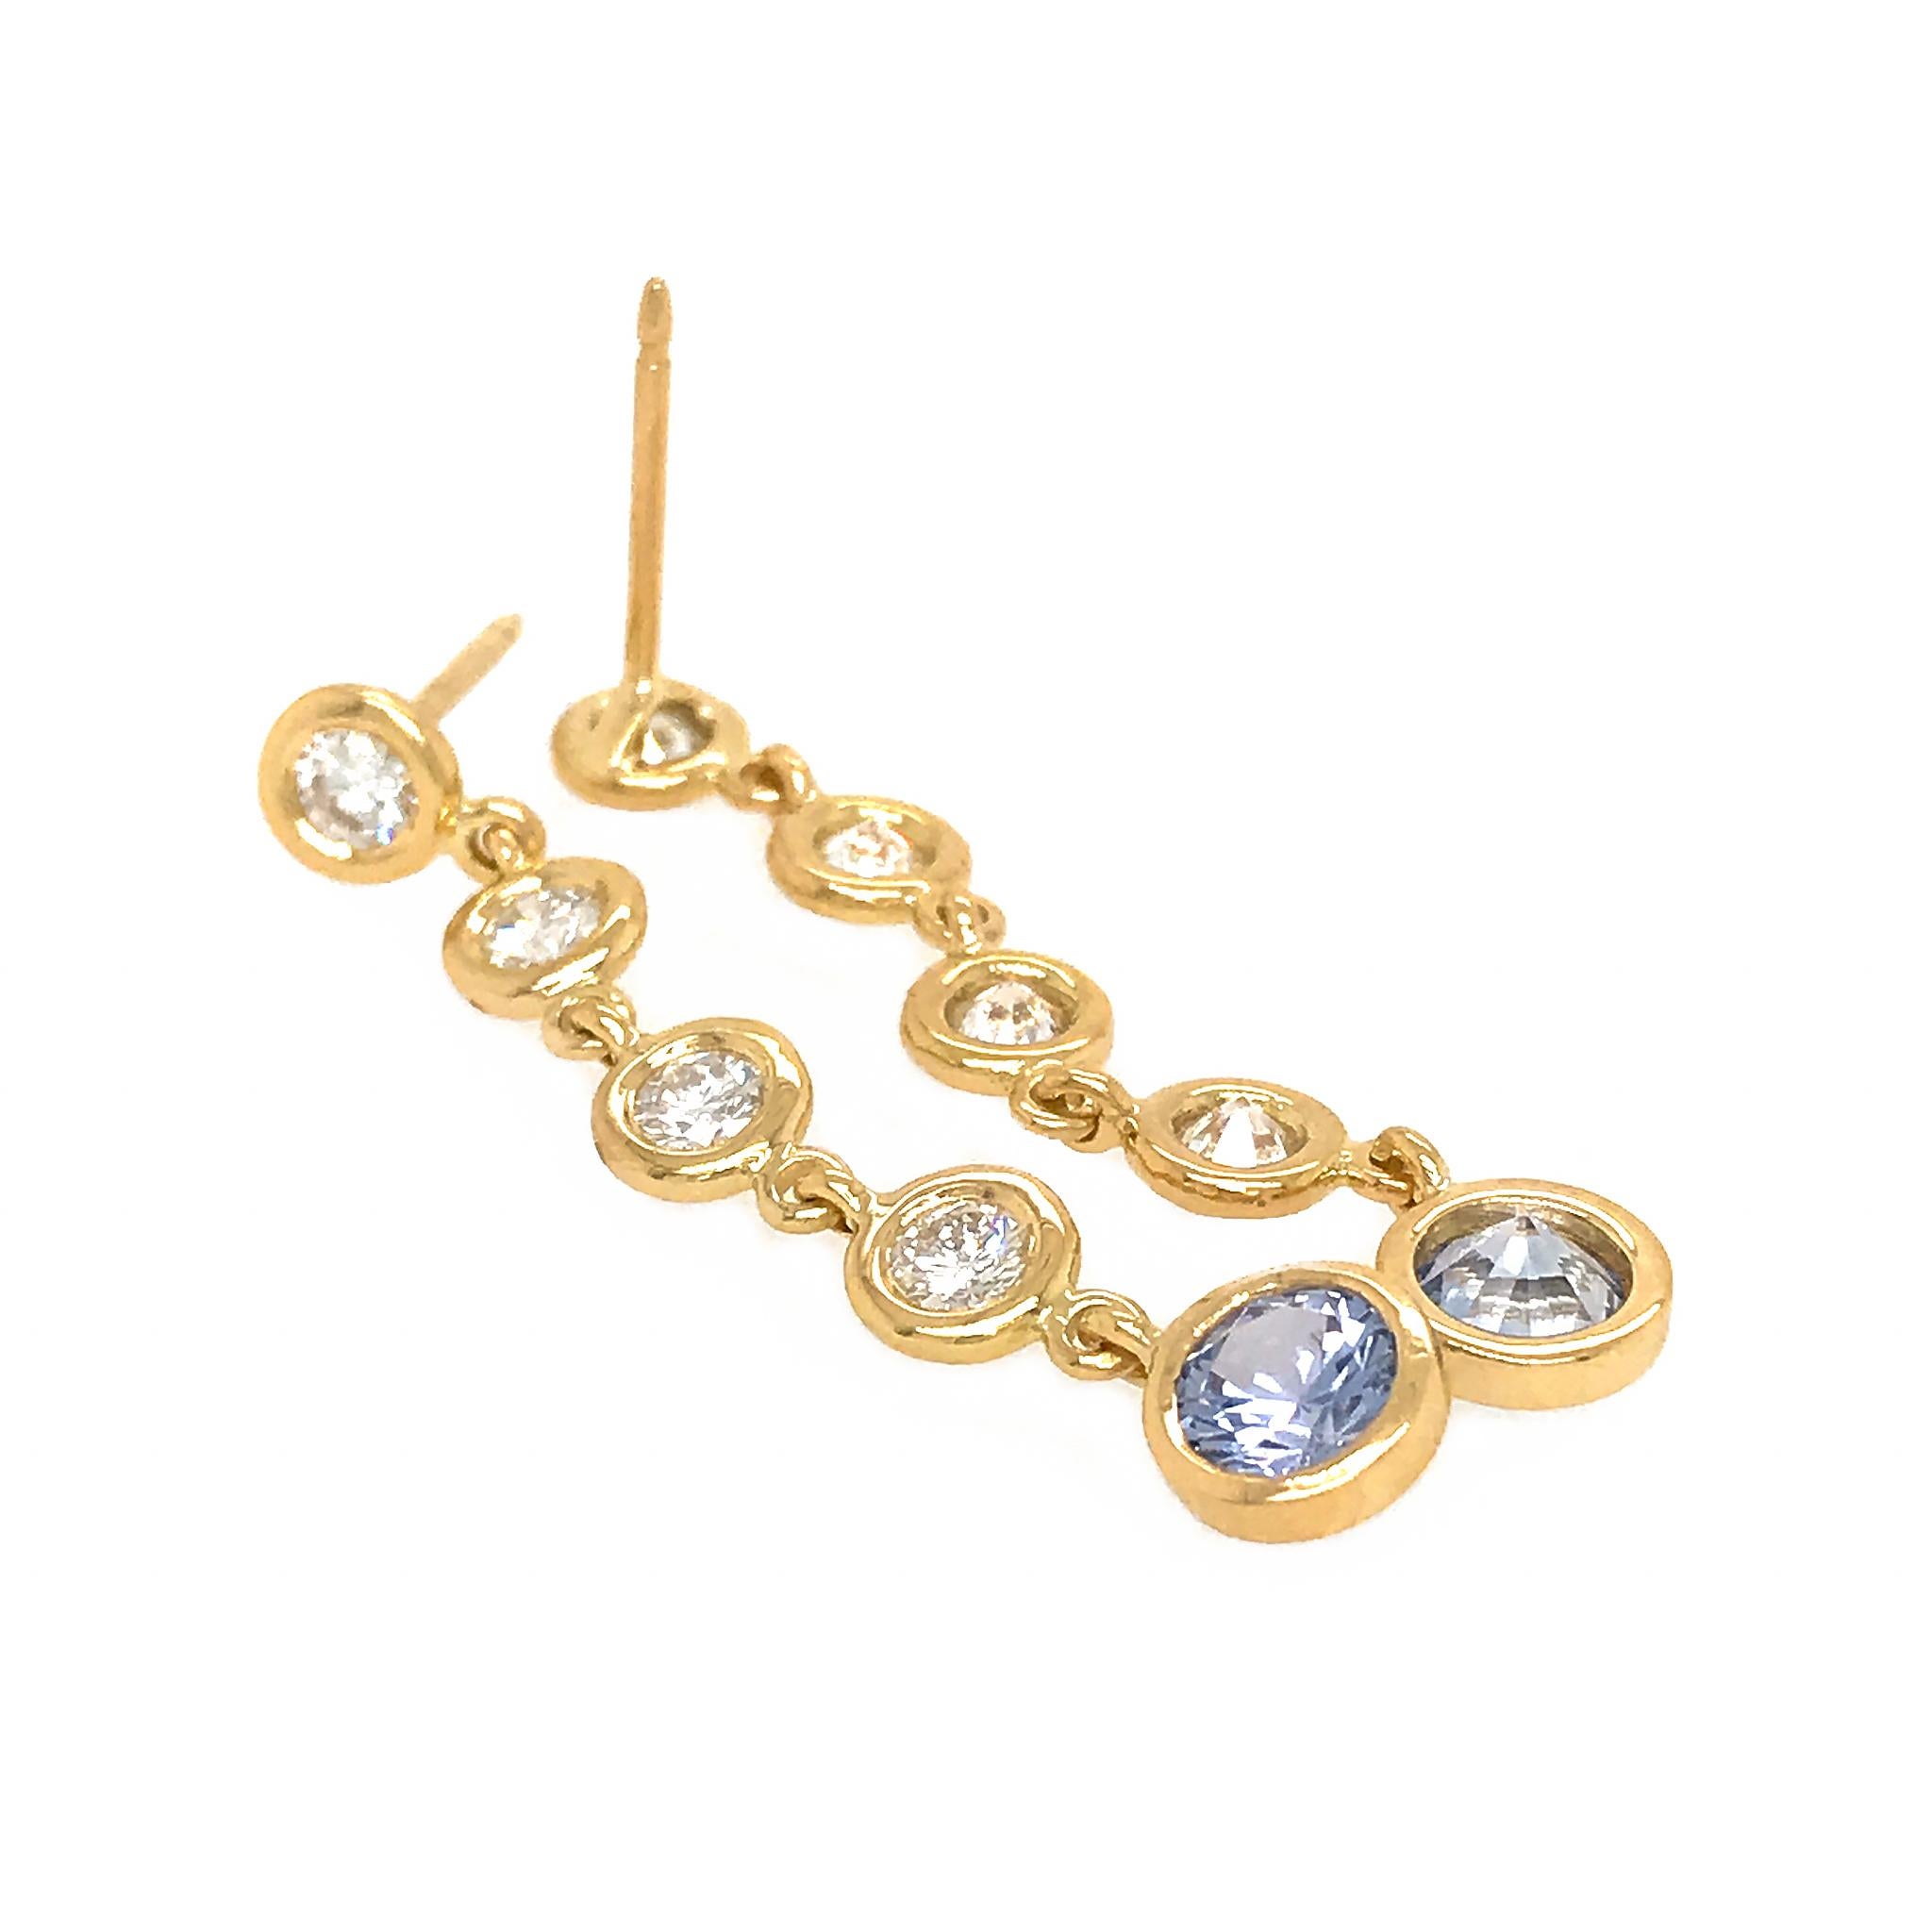 18K Yellow Gold
Diamond: 0.90 ct twd (Diamond)
Light Blue Ceylon Sapphire: 1.10 ct twd 
Total Weight: 3.7 grams
Earrings Length: 1.5 inches